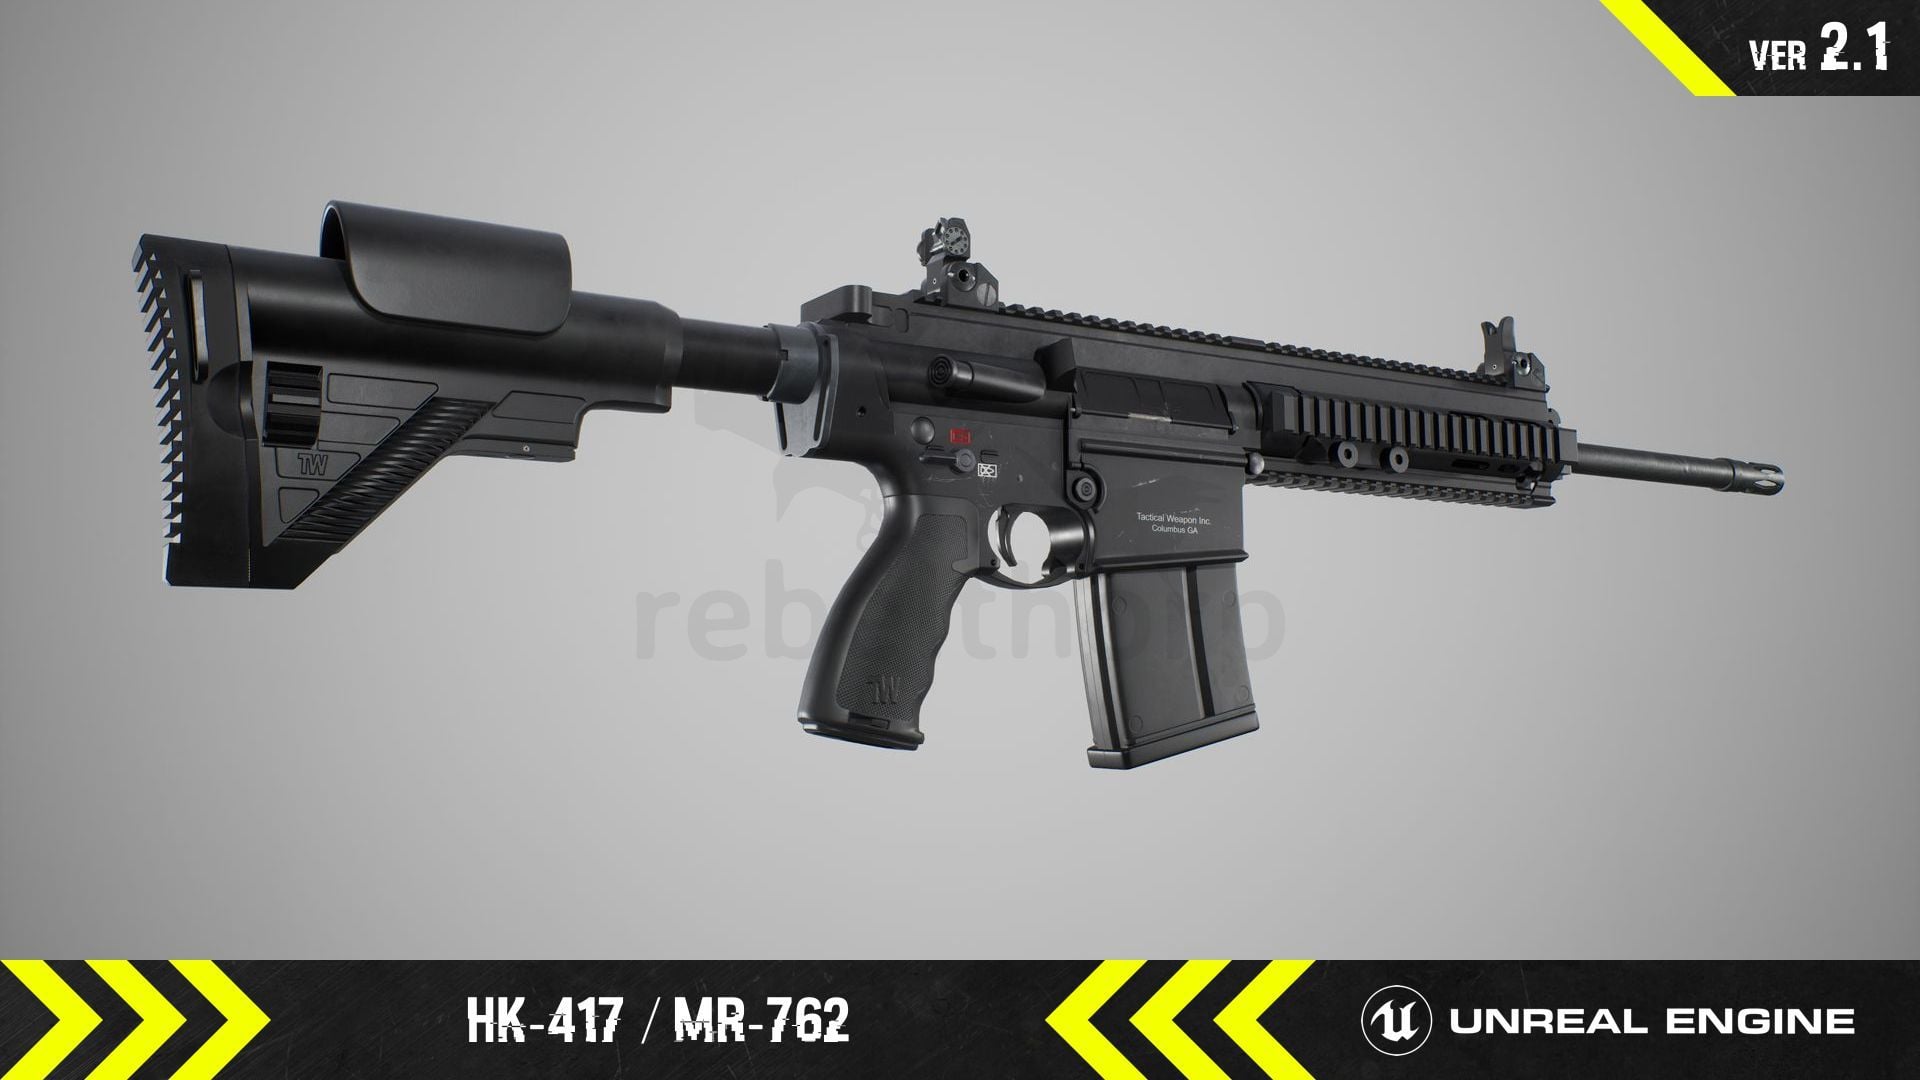 HK-417 / MR-762